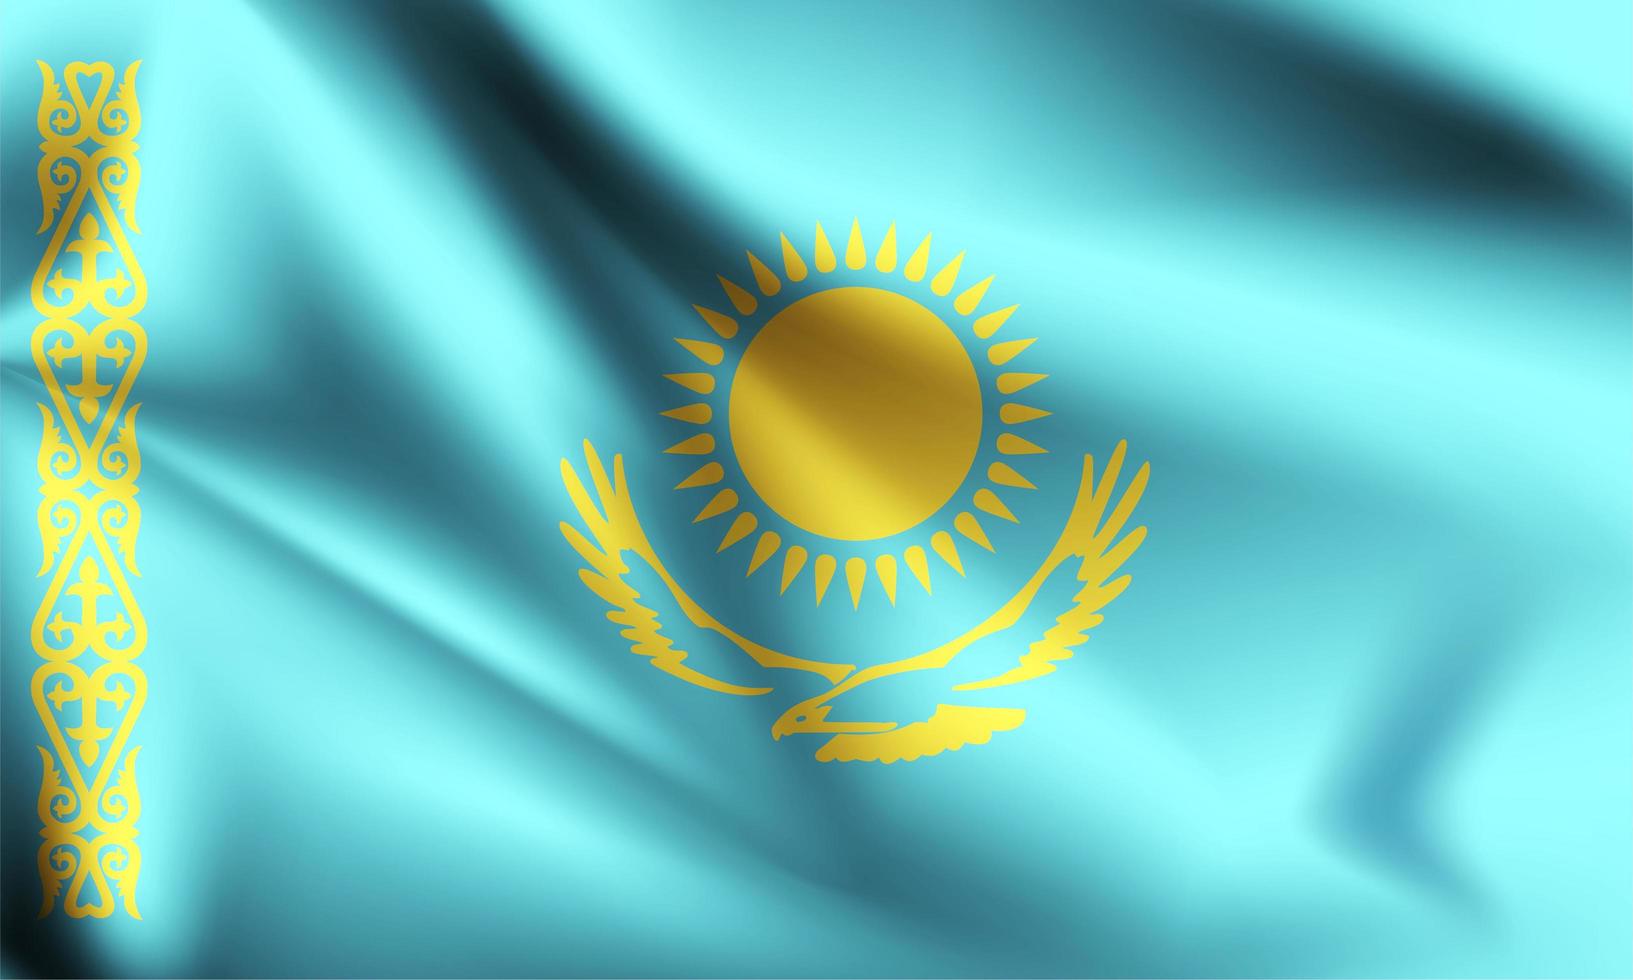 Kazakhstan 3d flag - Download Free Vectors, Clipart ...